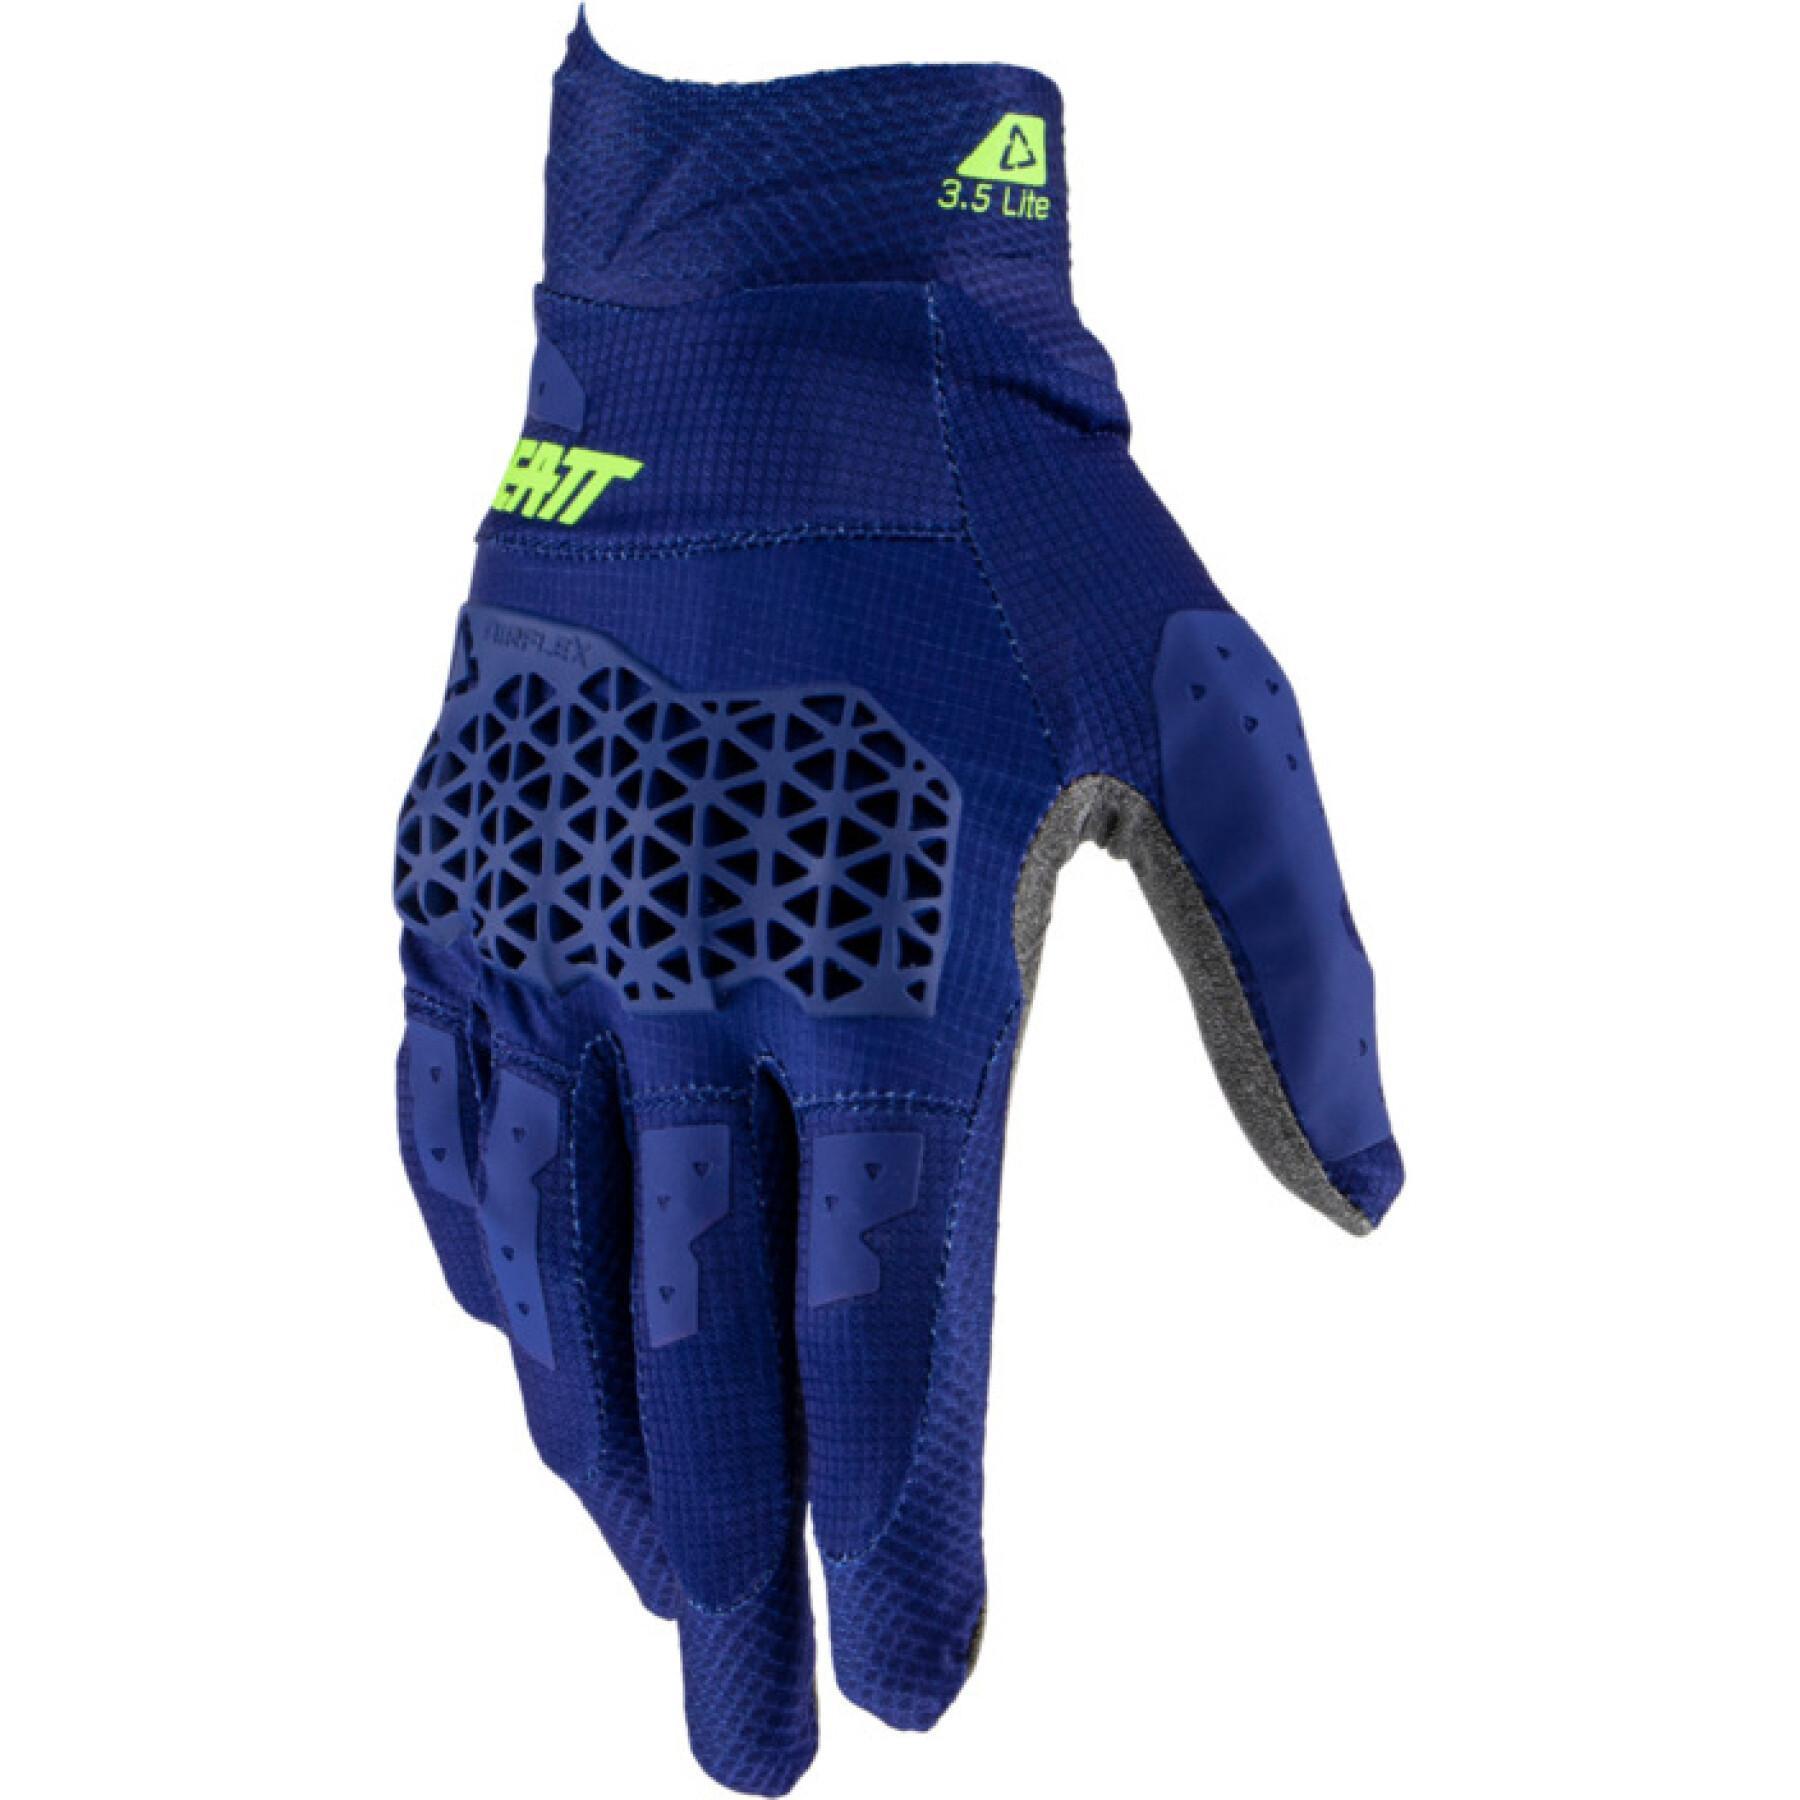 Motorcycle cross gloves Leatt 3.5 Lite 23